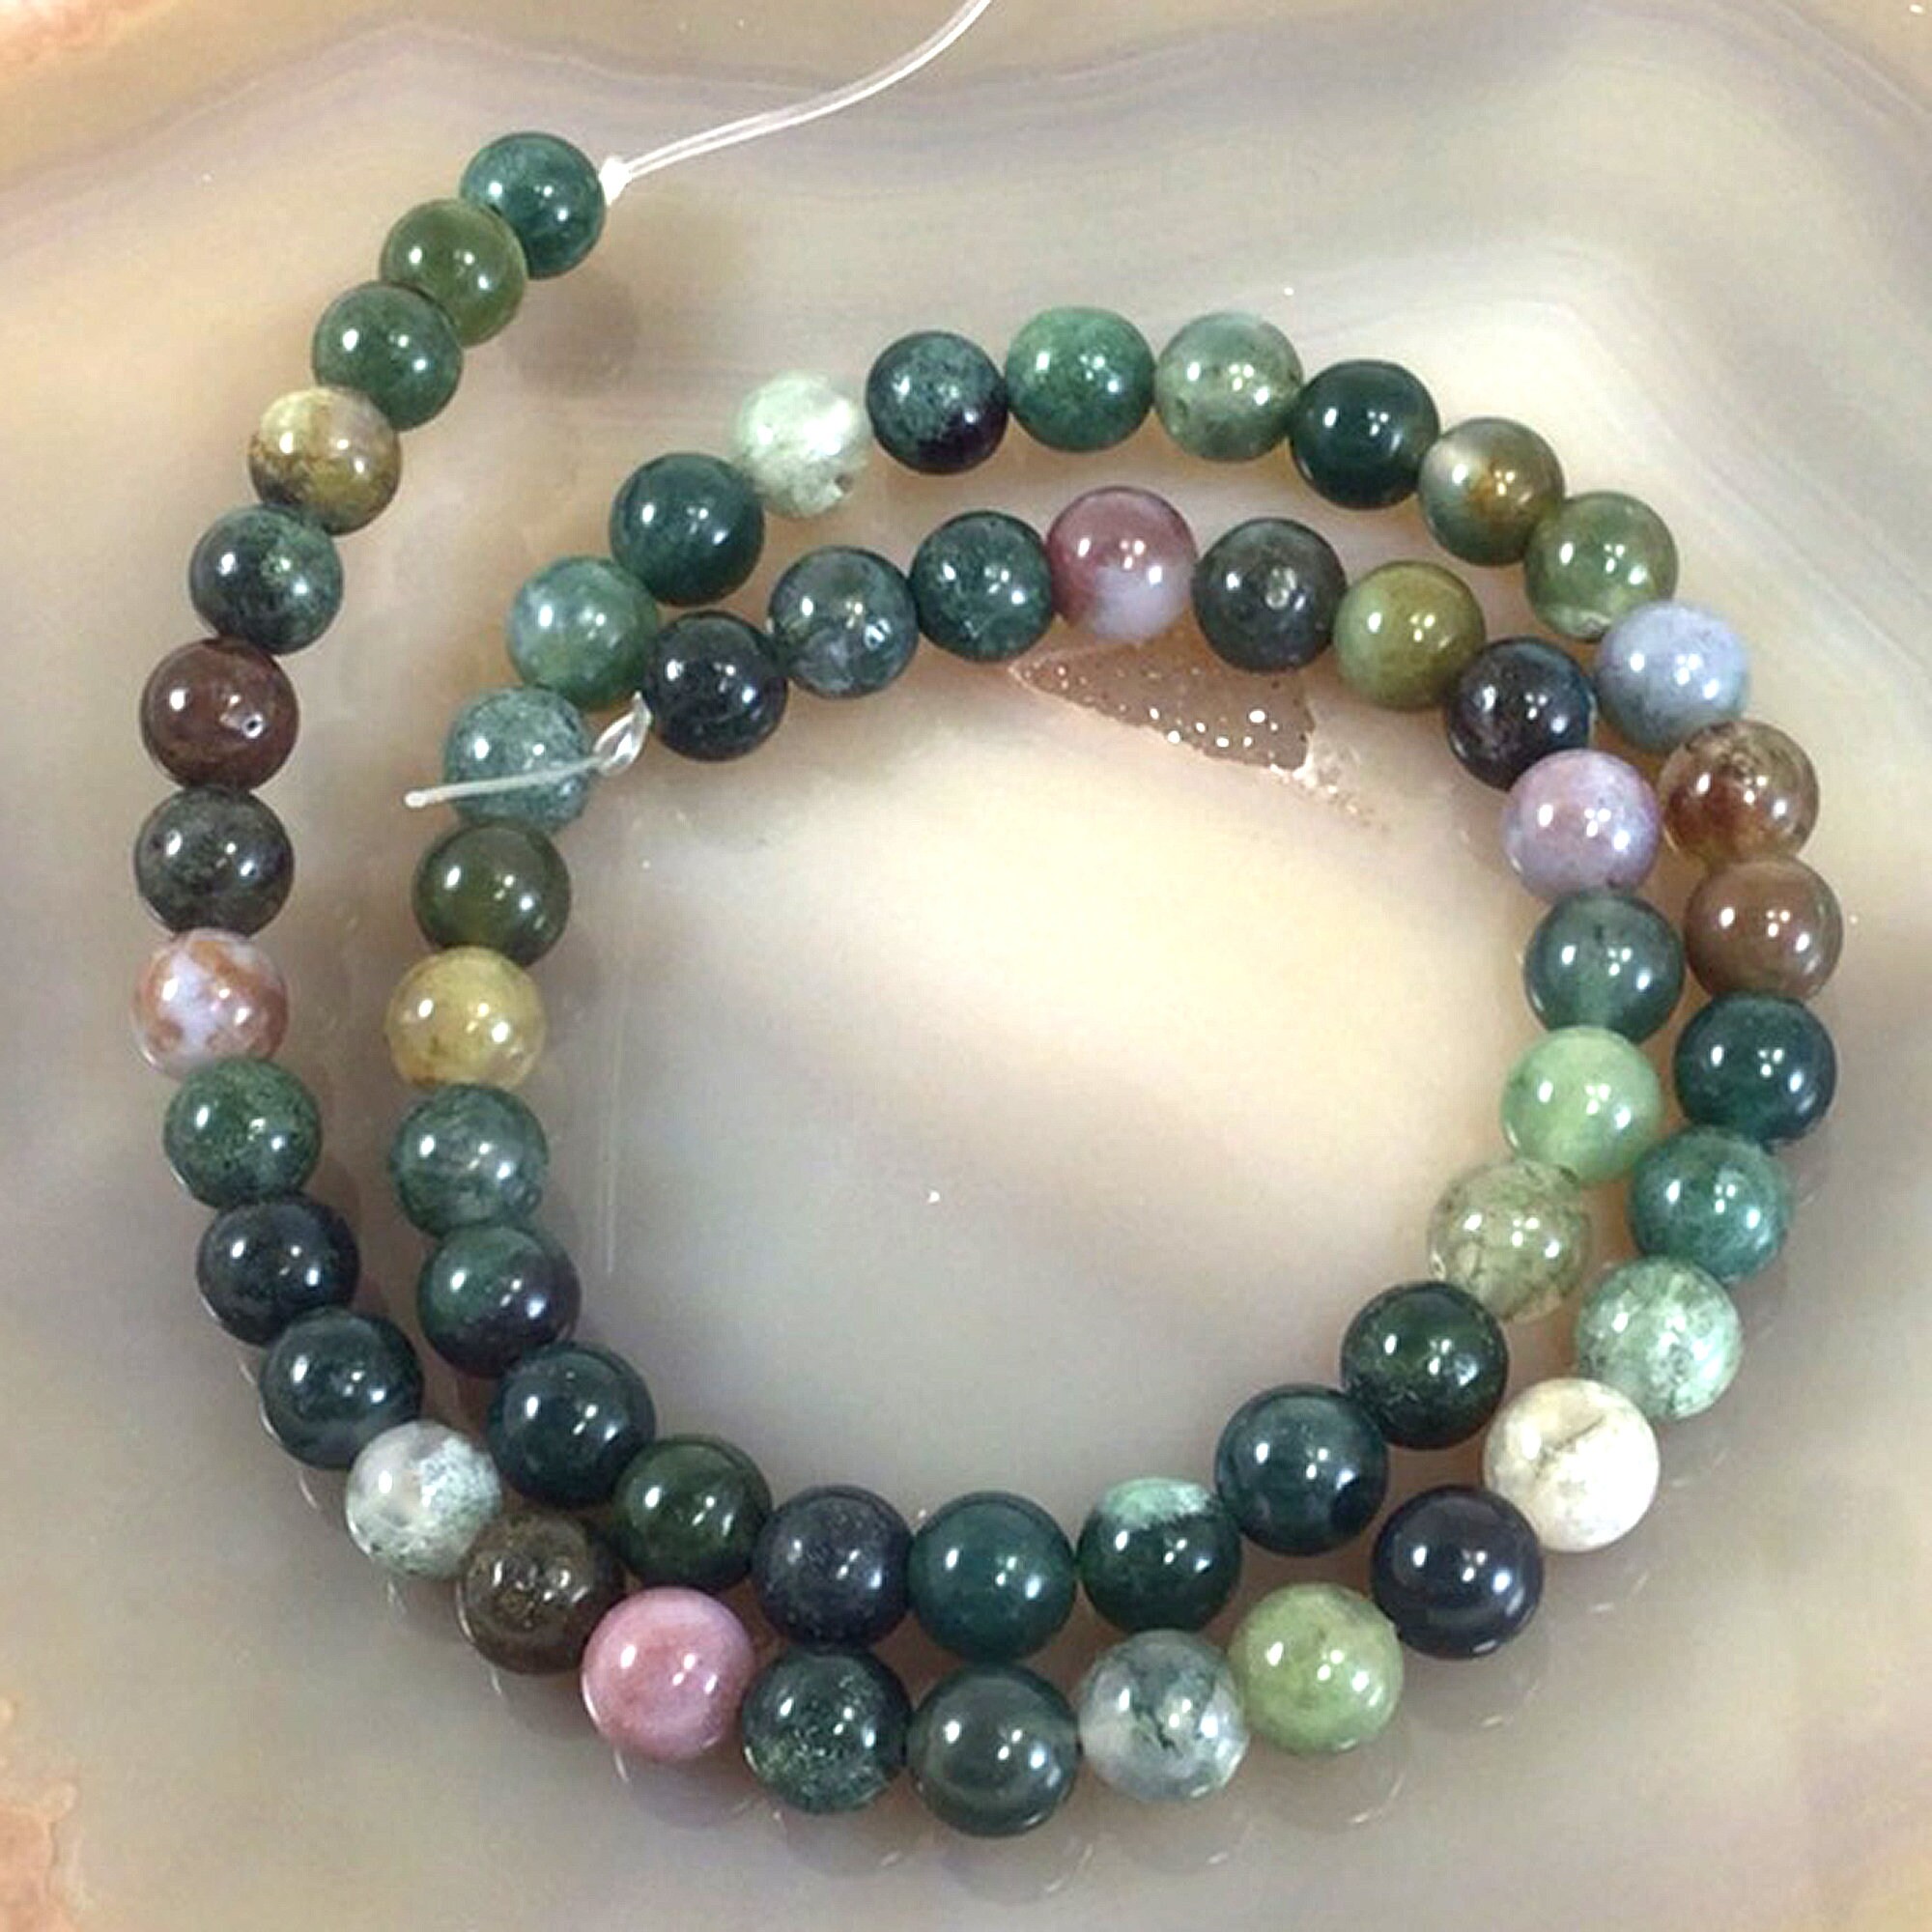 Natural Fancy Agate Beads Gemstone Round Loose Beads, 4mm 6mm 8mm 10mm  12mm Agate Jewelry Making Necklace Bracelet 15 Full Strand Bulk Lot · NY6  Design